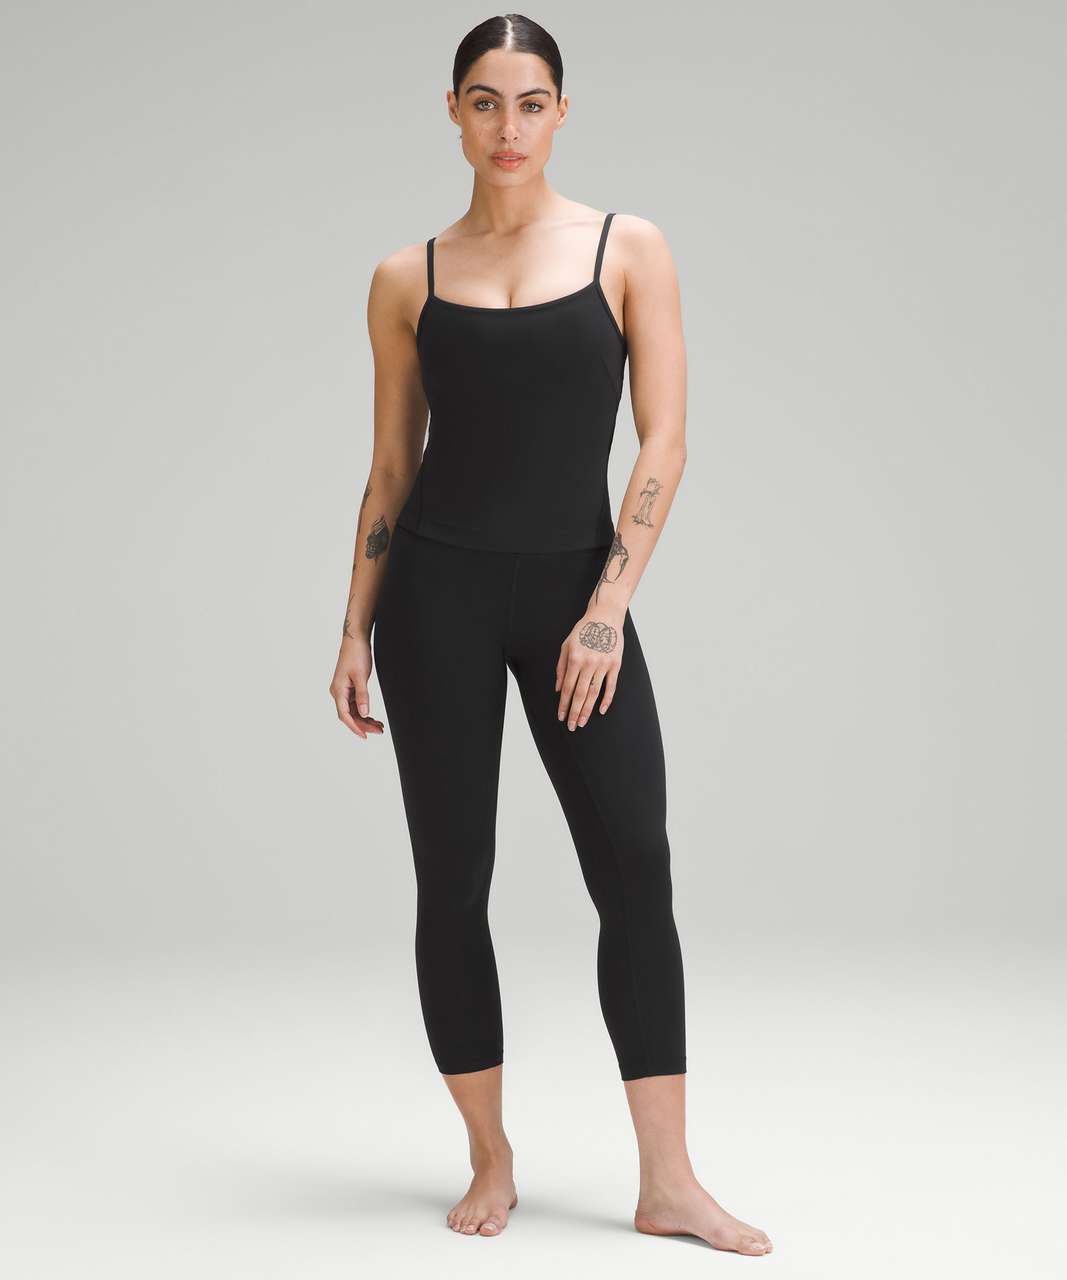 EUC Lululemon NO LIMITS Athletic Tank Top Yoga Workout Activewear